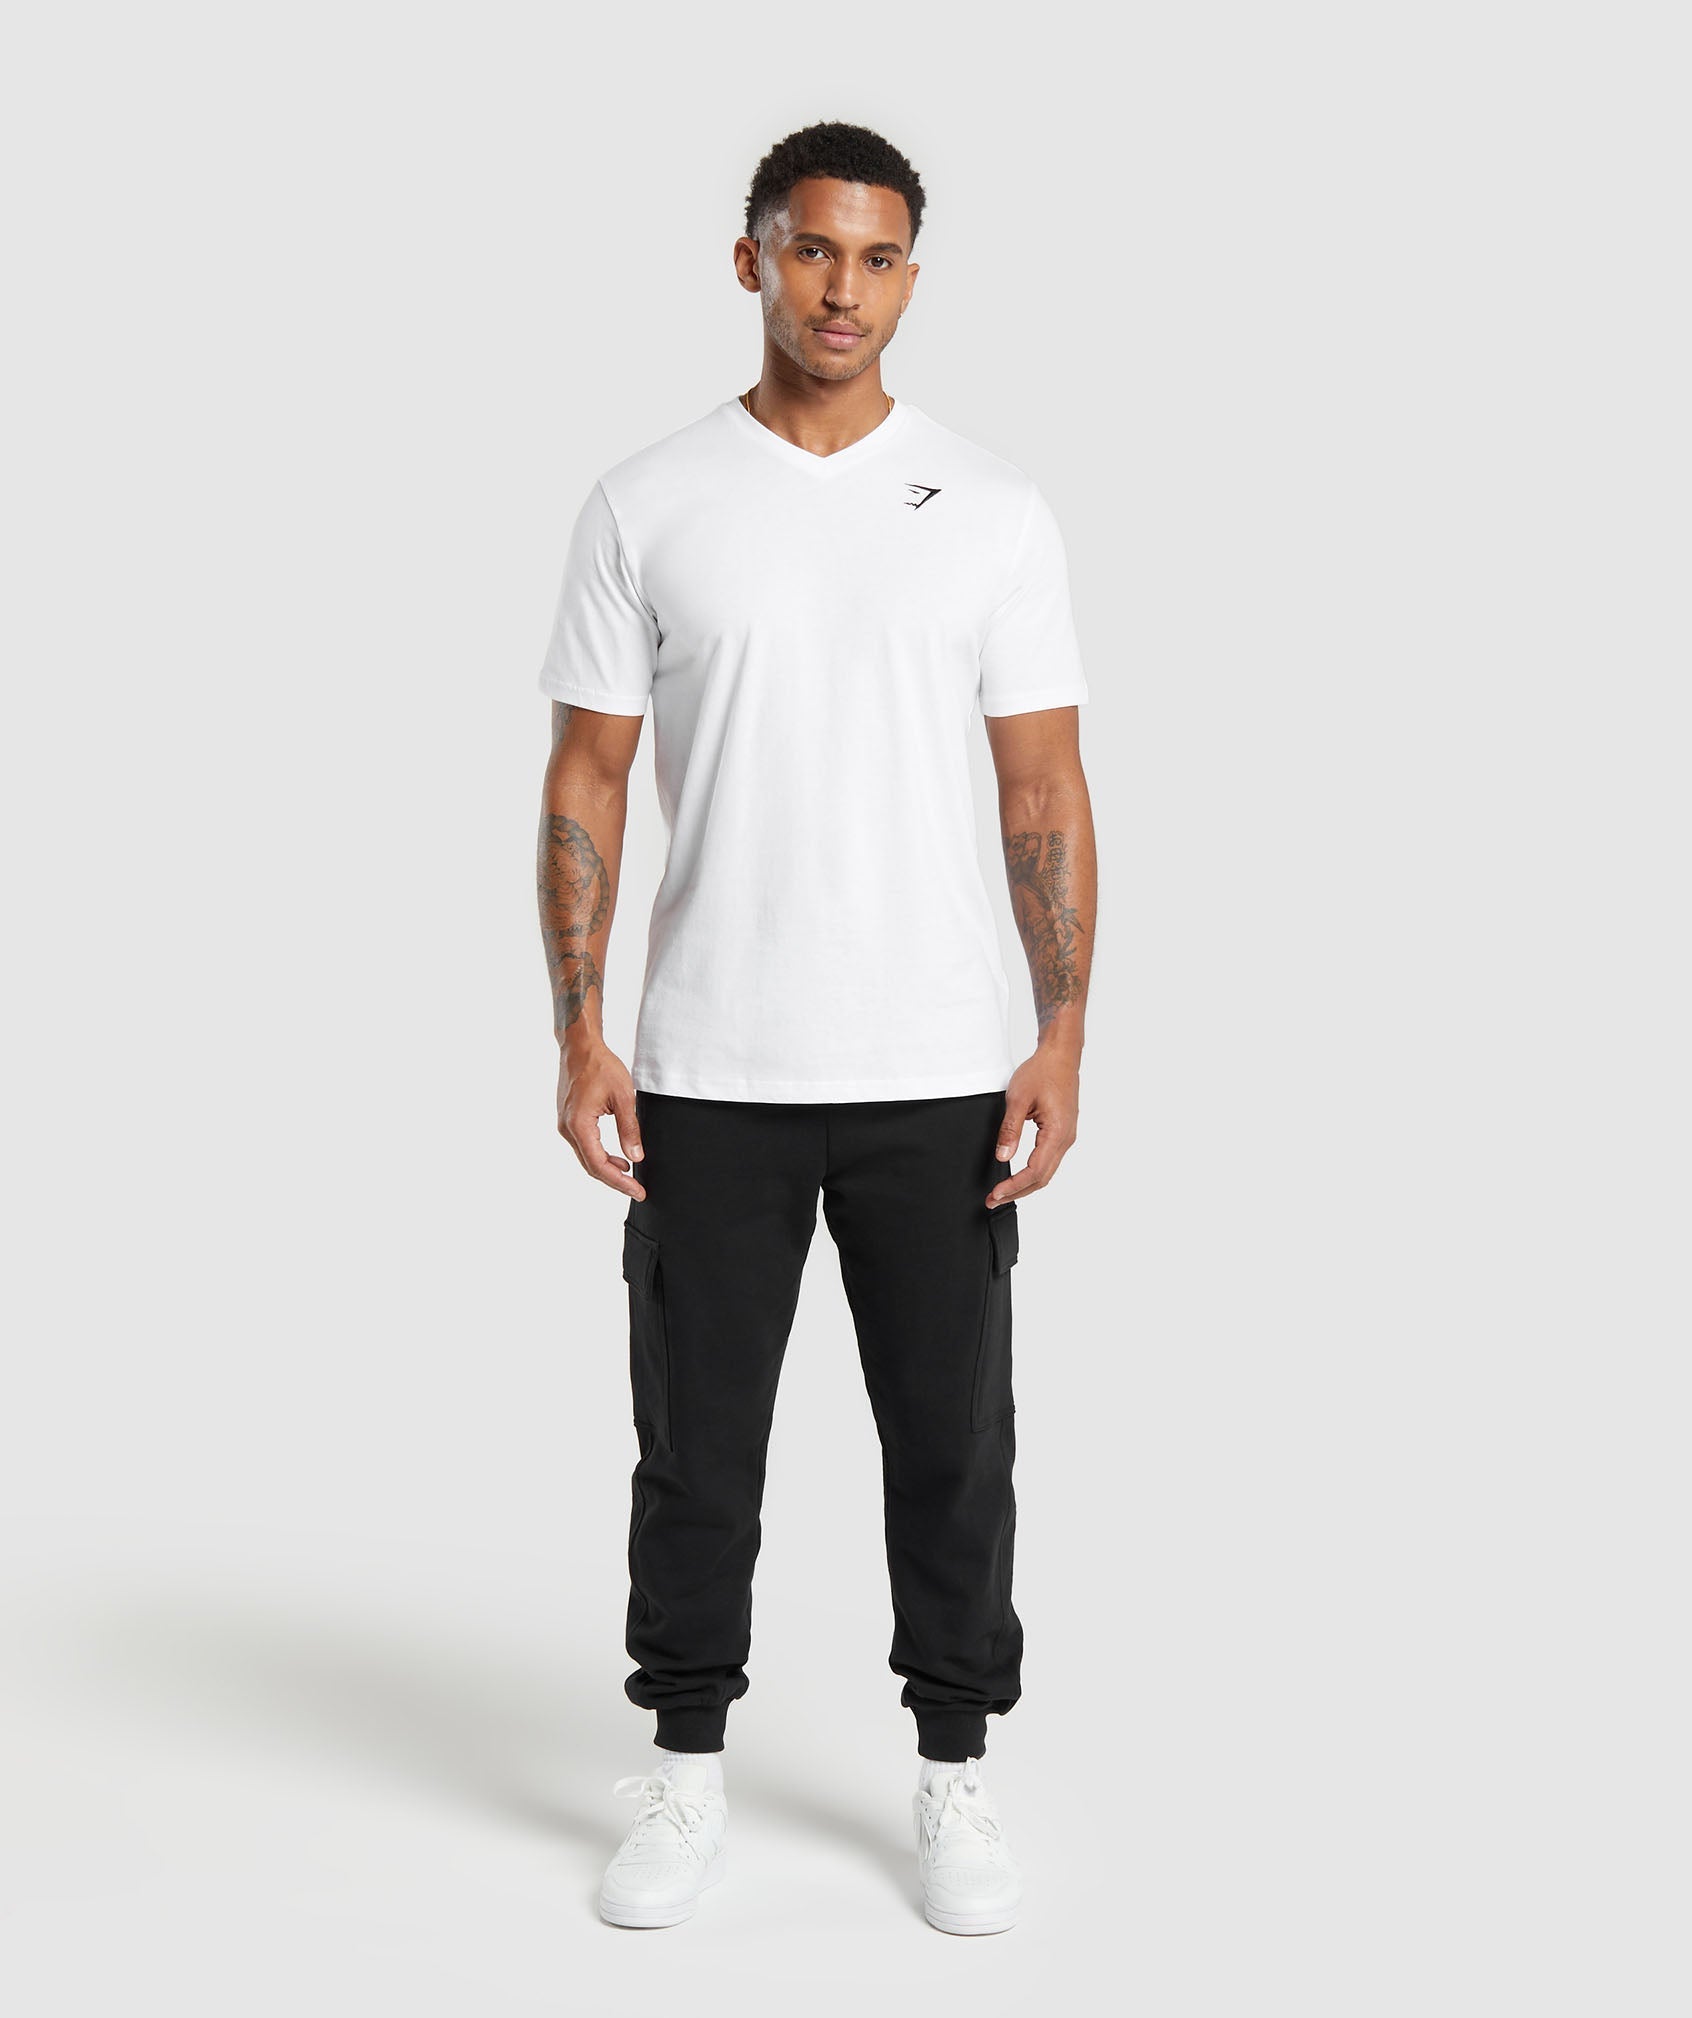 Crest V-Neck T Shirt in White - view 4